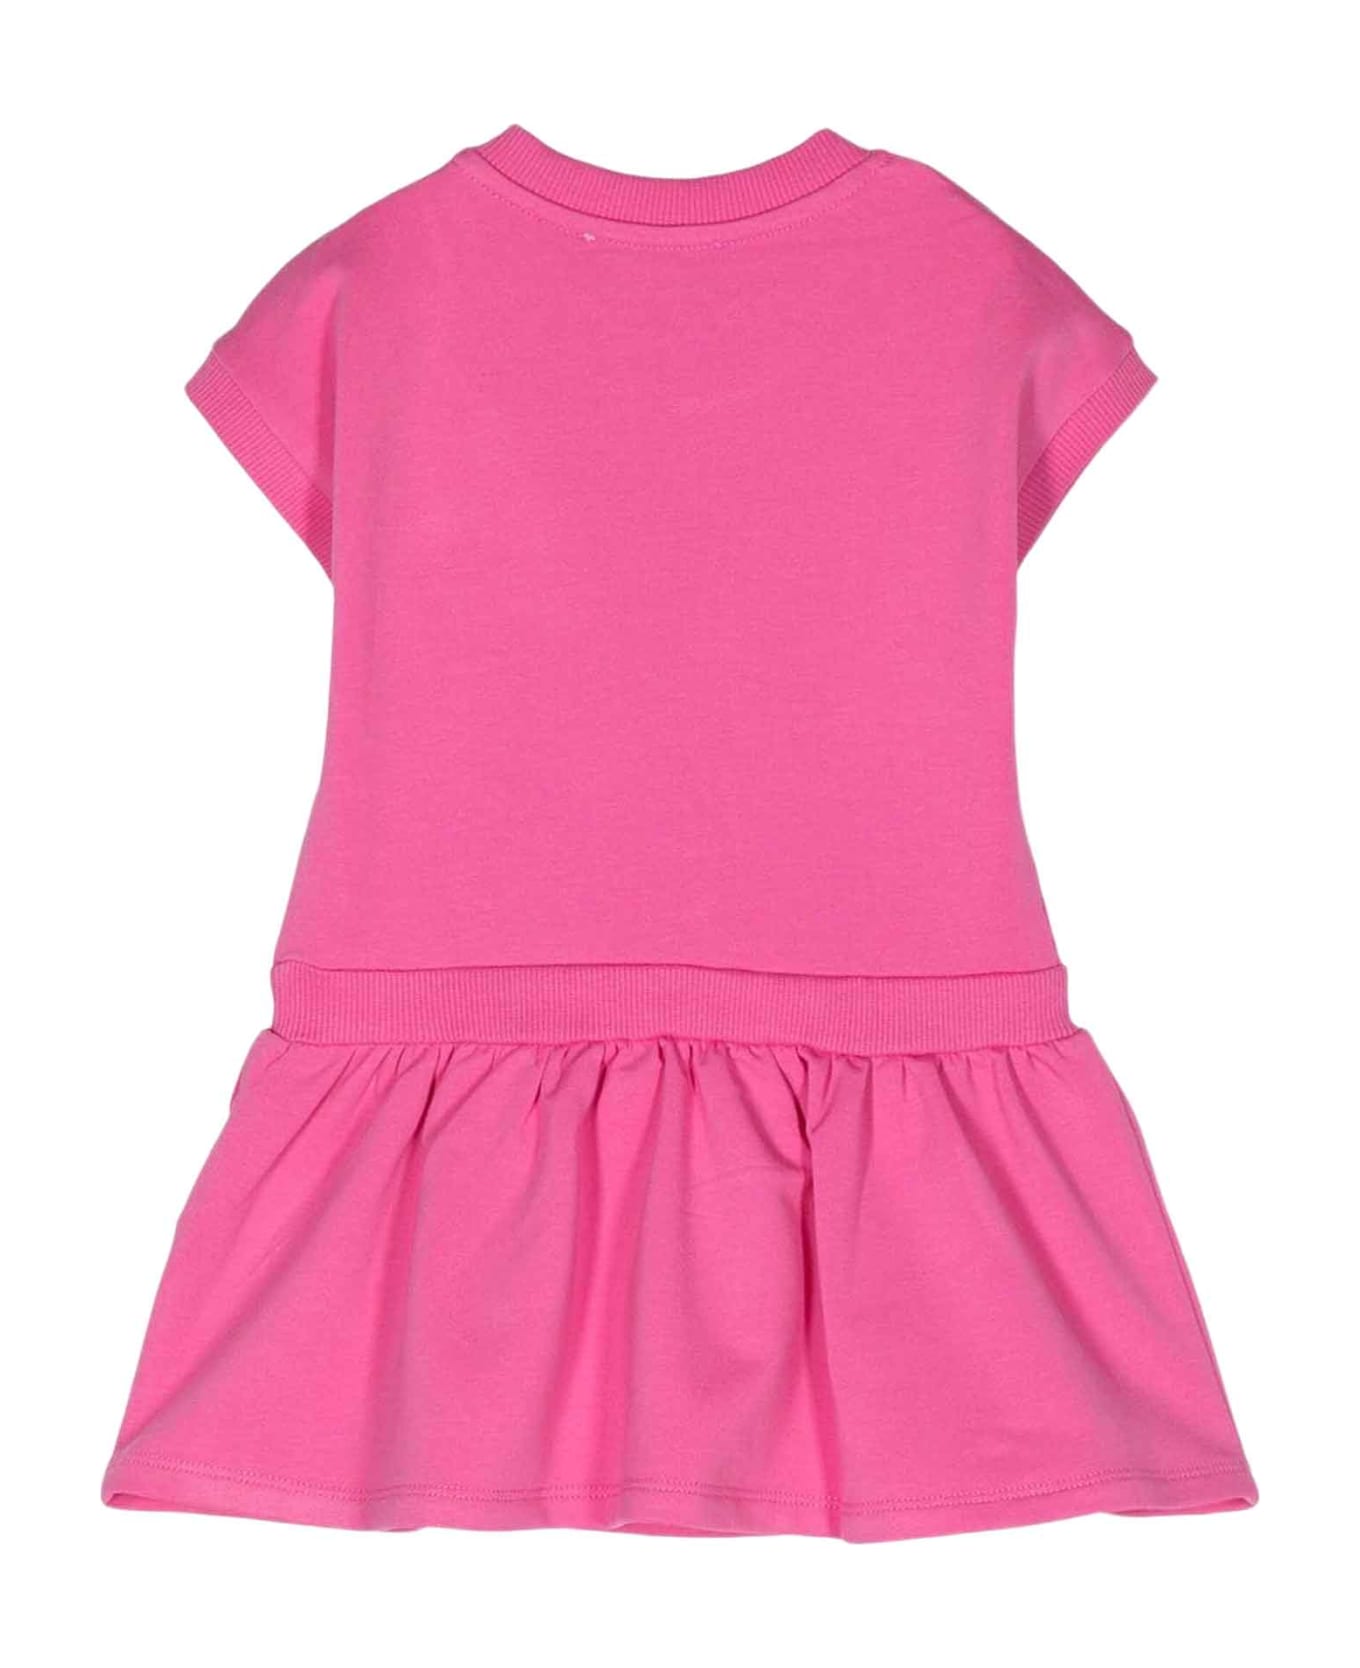 Moschino Pink Dress Baby Girl - Fucsia